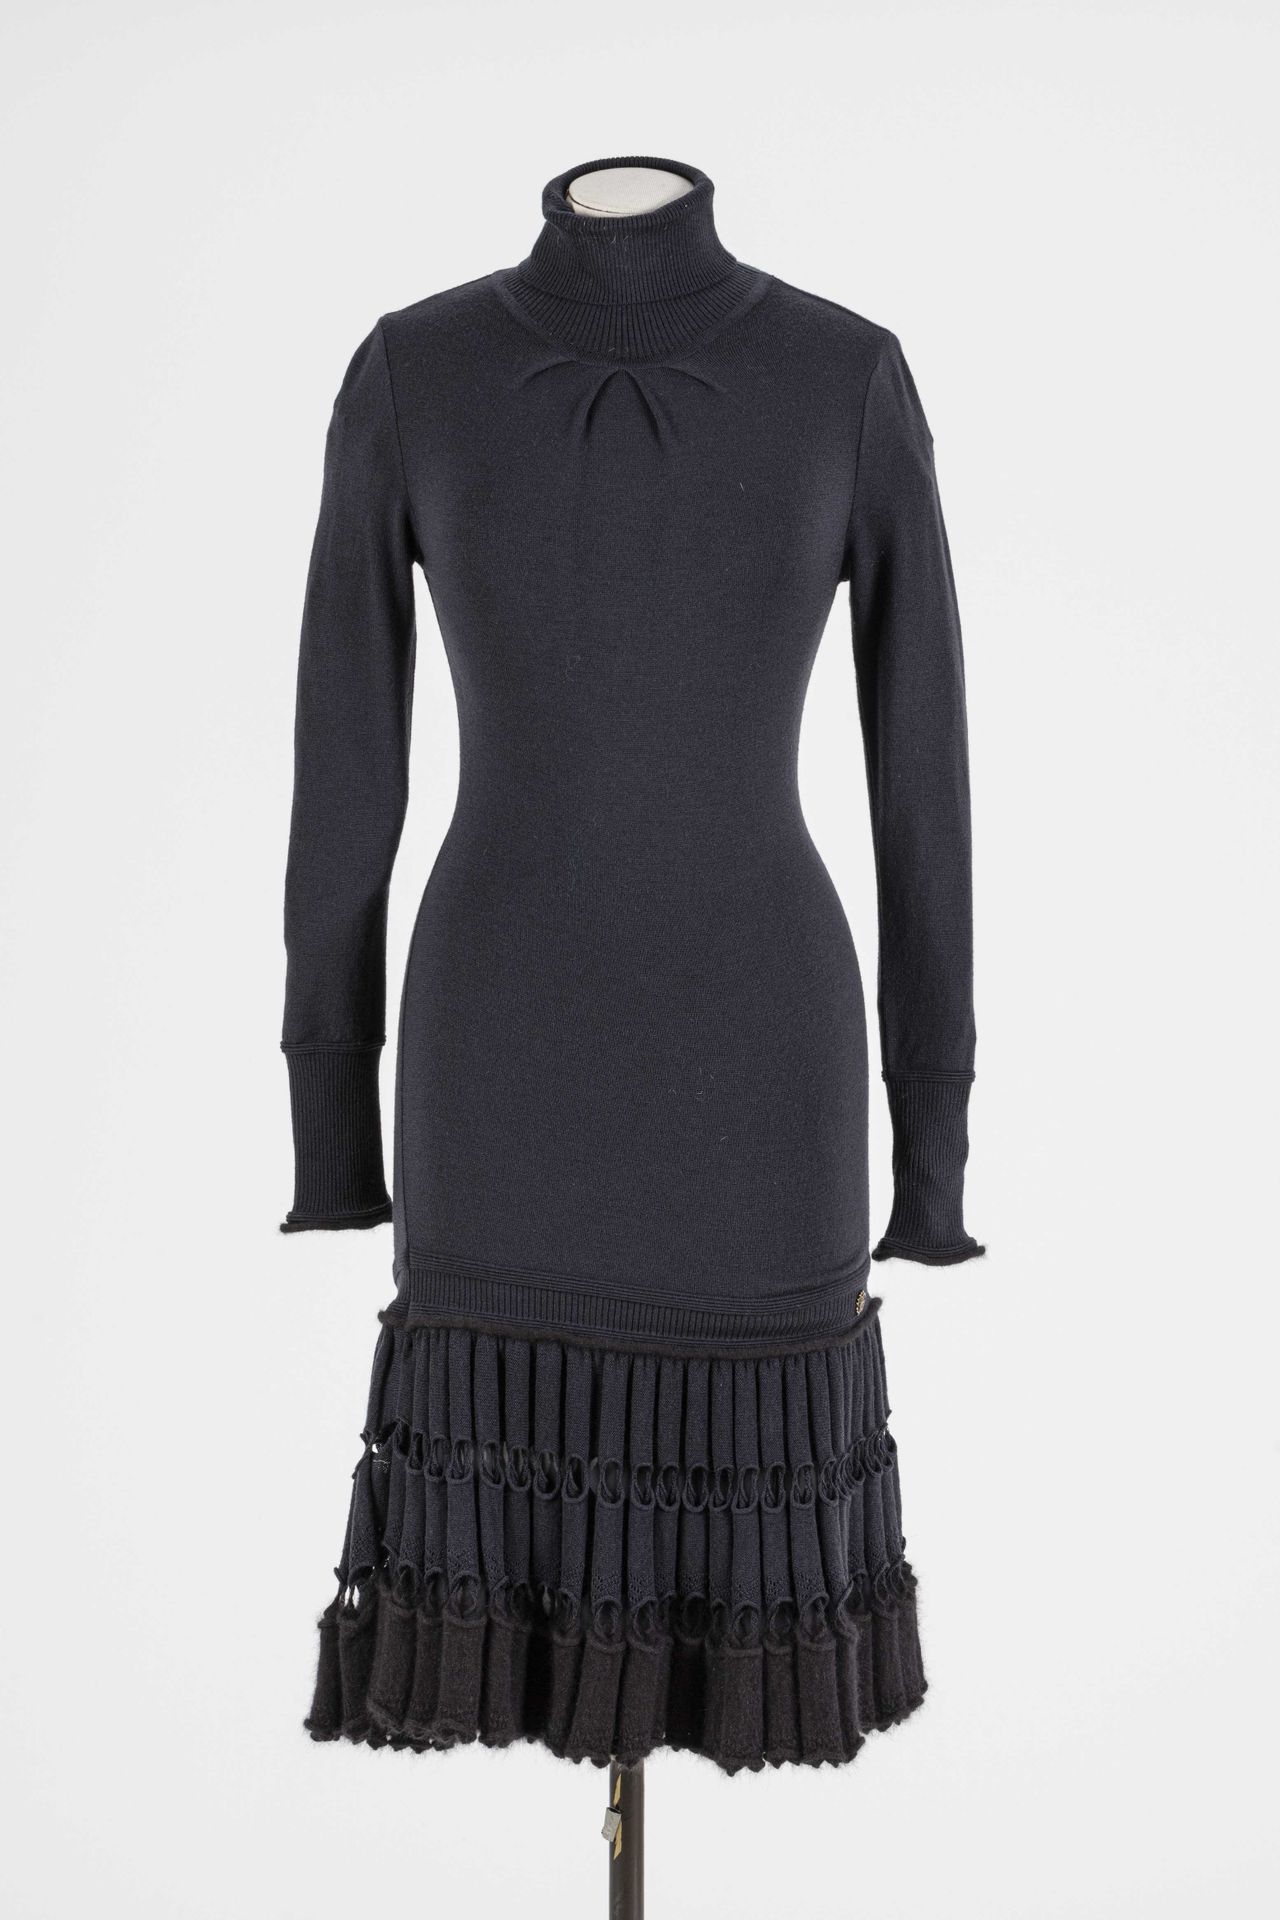 Null ROBERTO CAVALLI：灰色羊毛和弹性纤维长裙，长袖，高领，底部有镂空褶皱效果。

T.36